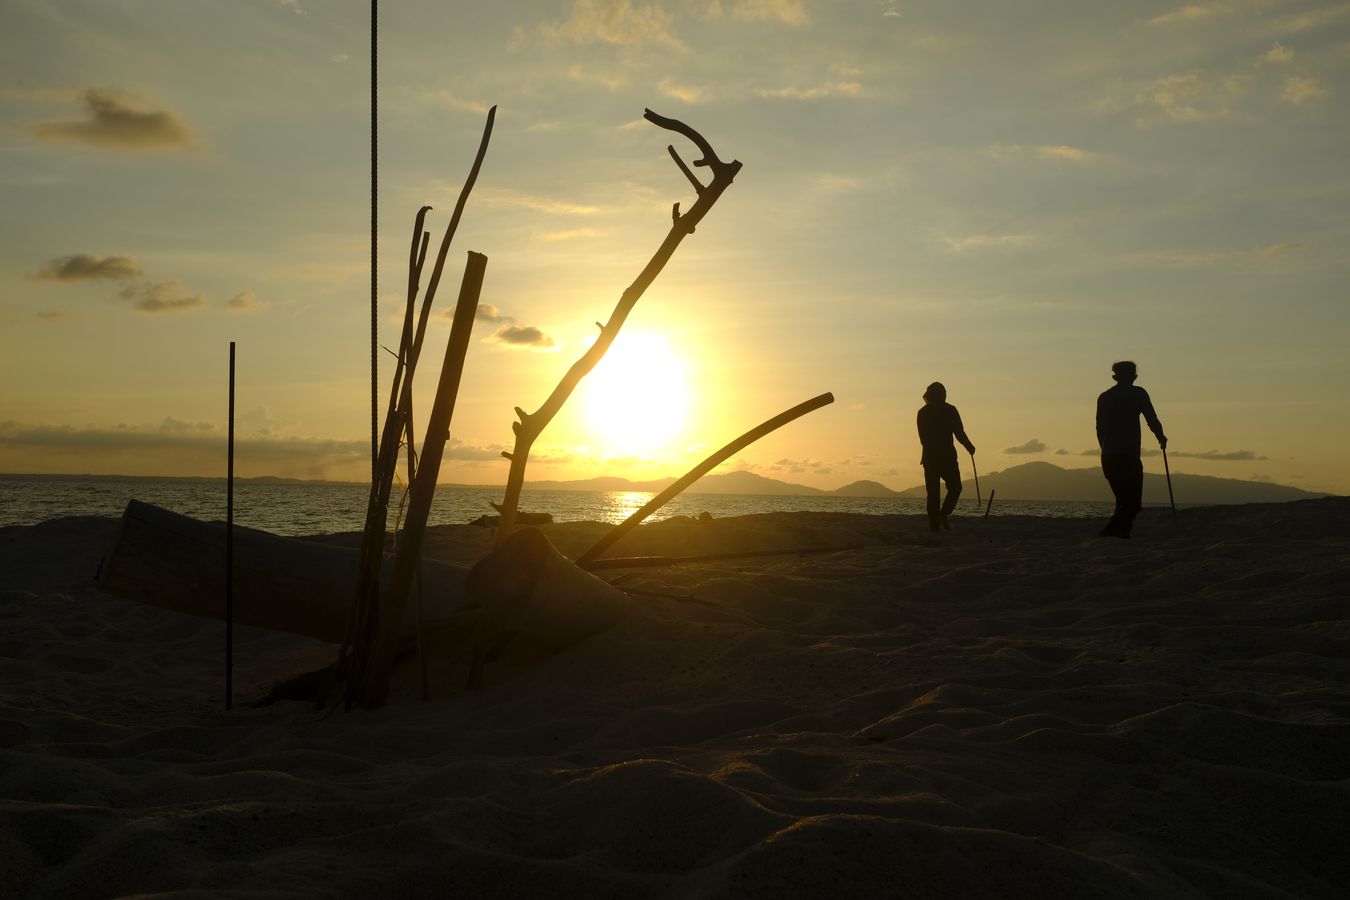 Rangers scour the beach at sunset.